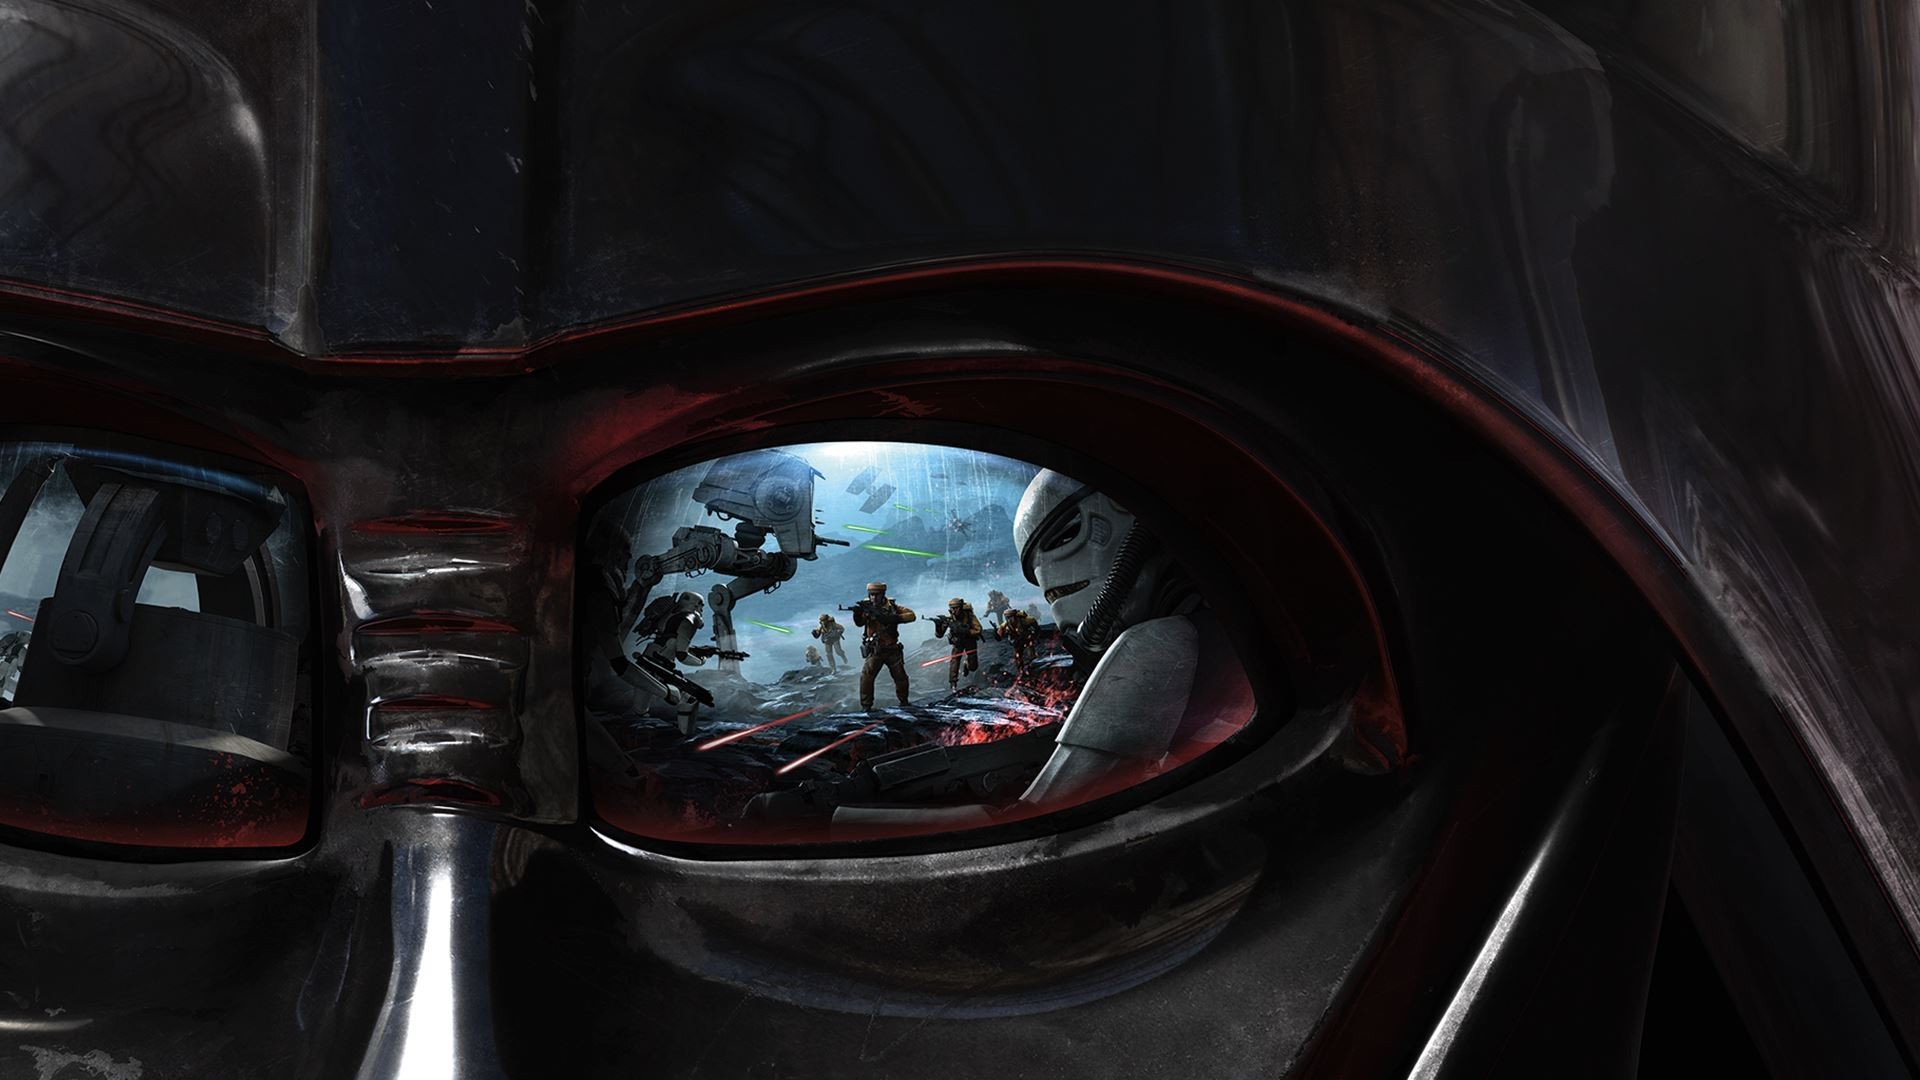 General Star Wars Darth Vader artwork concept art science fiction reflection closeup Star Wars